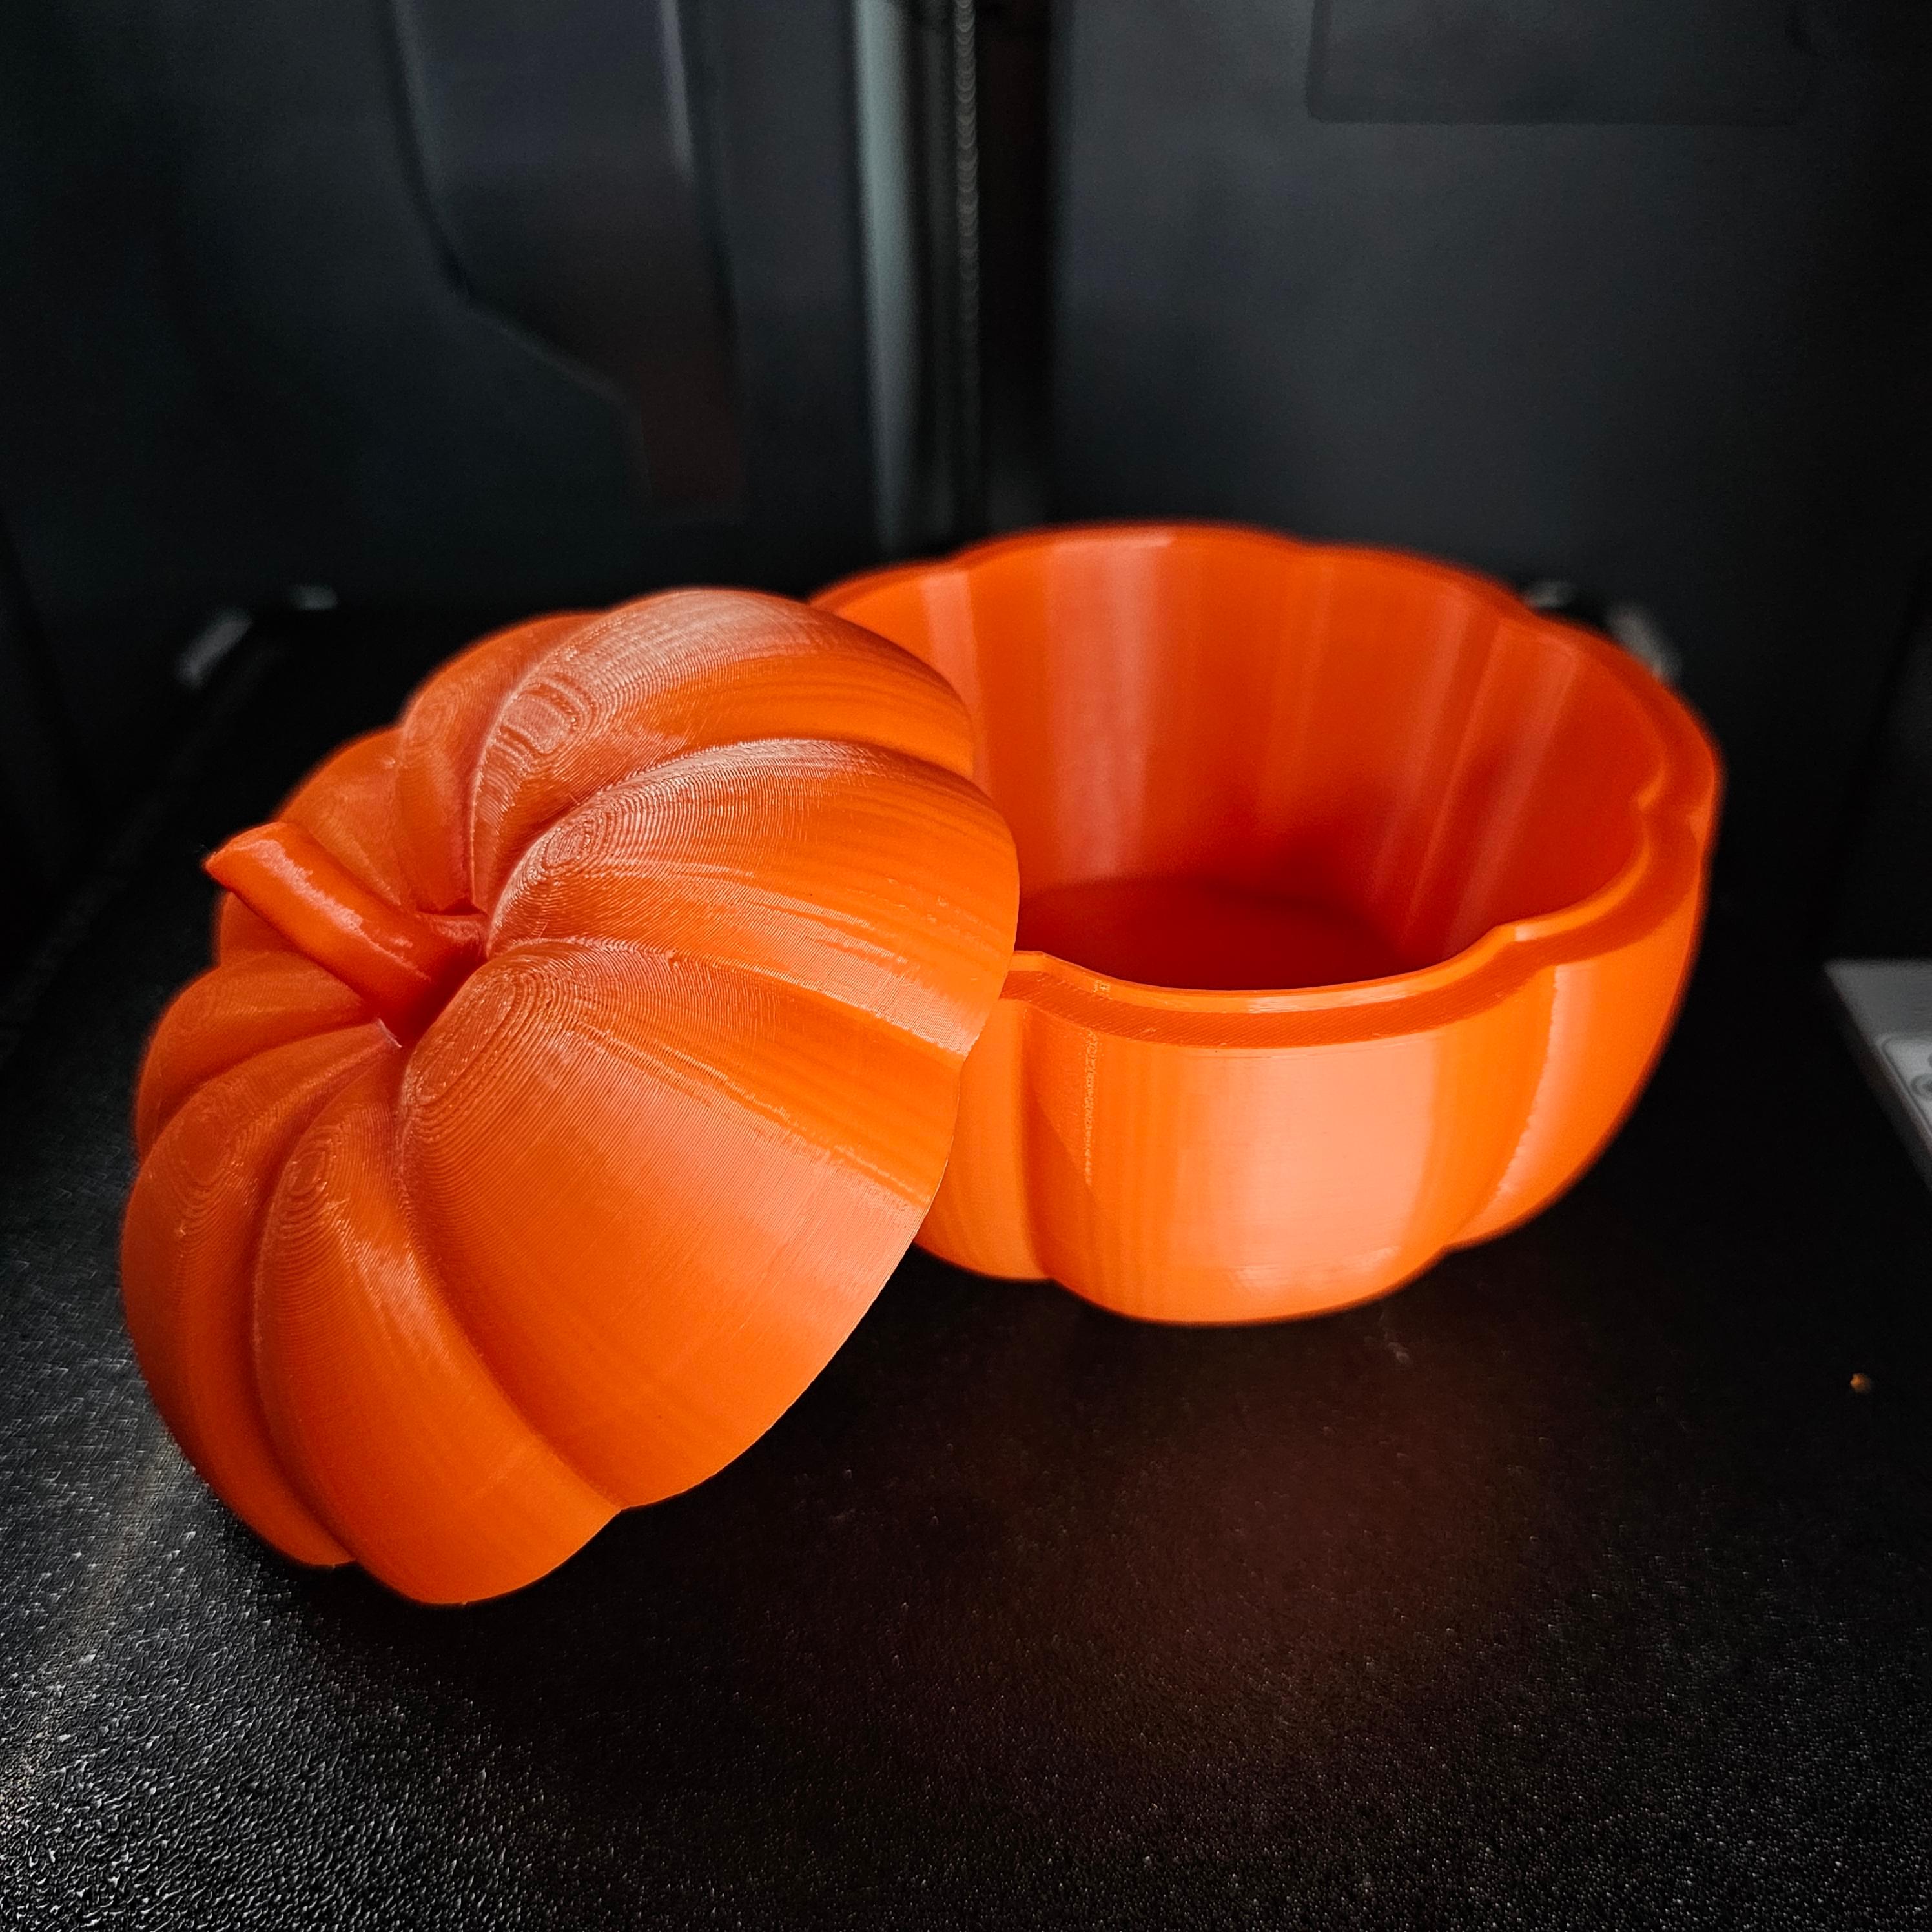 Pumpkin Stash with Lid 3d model